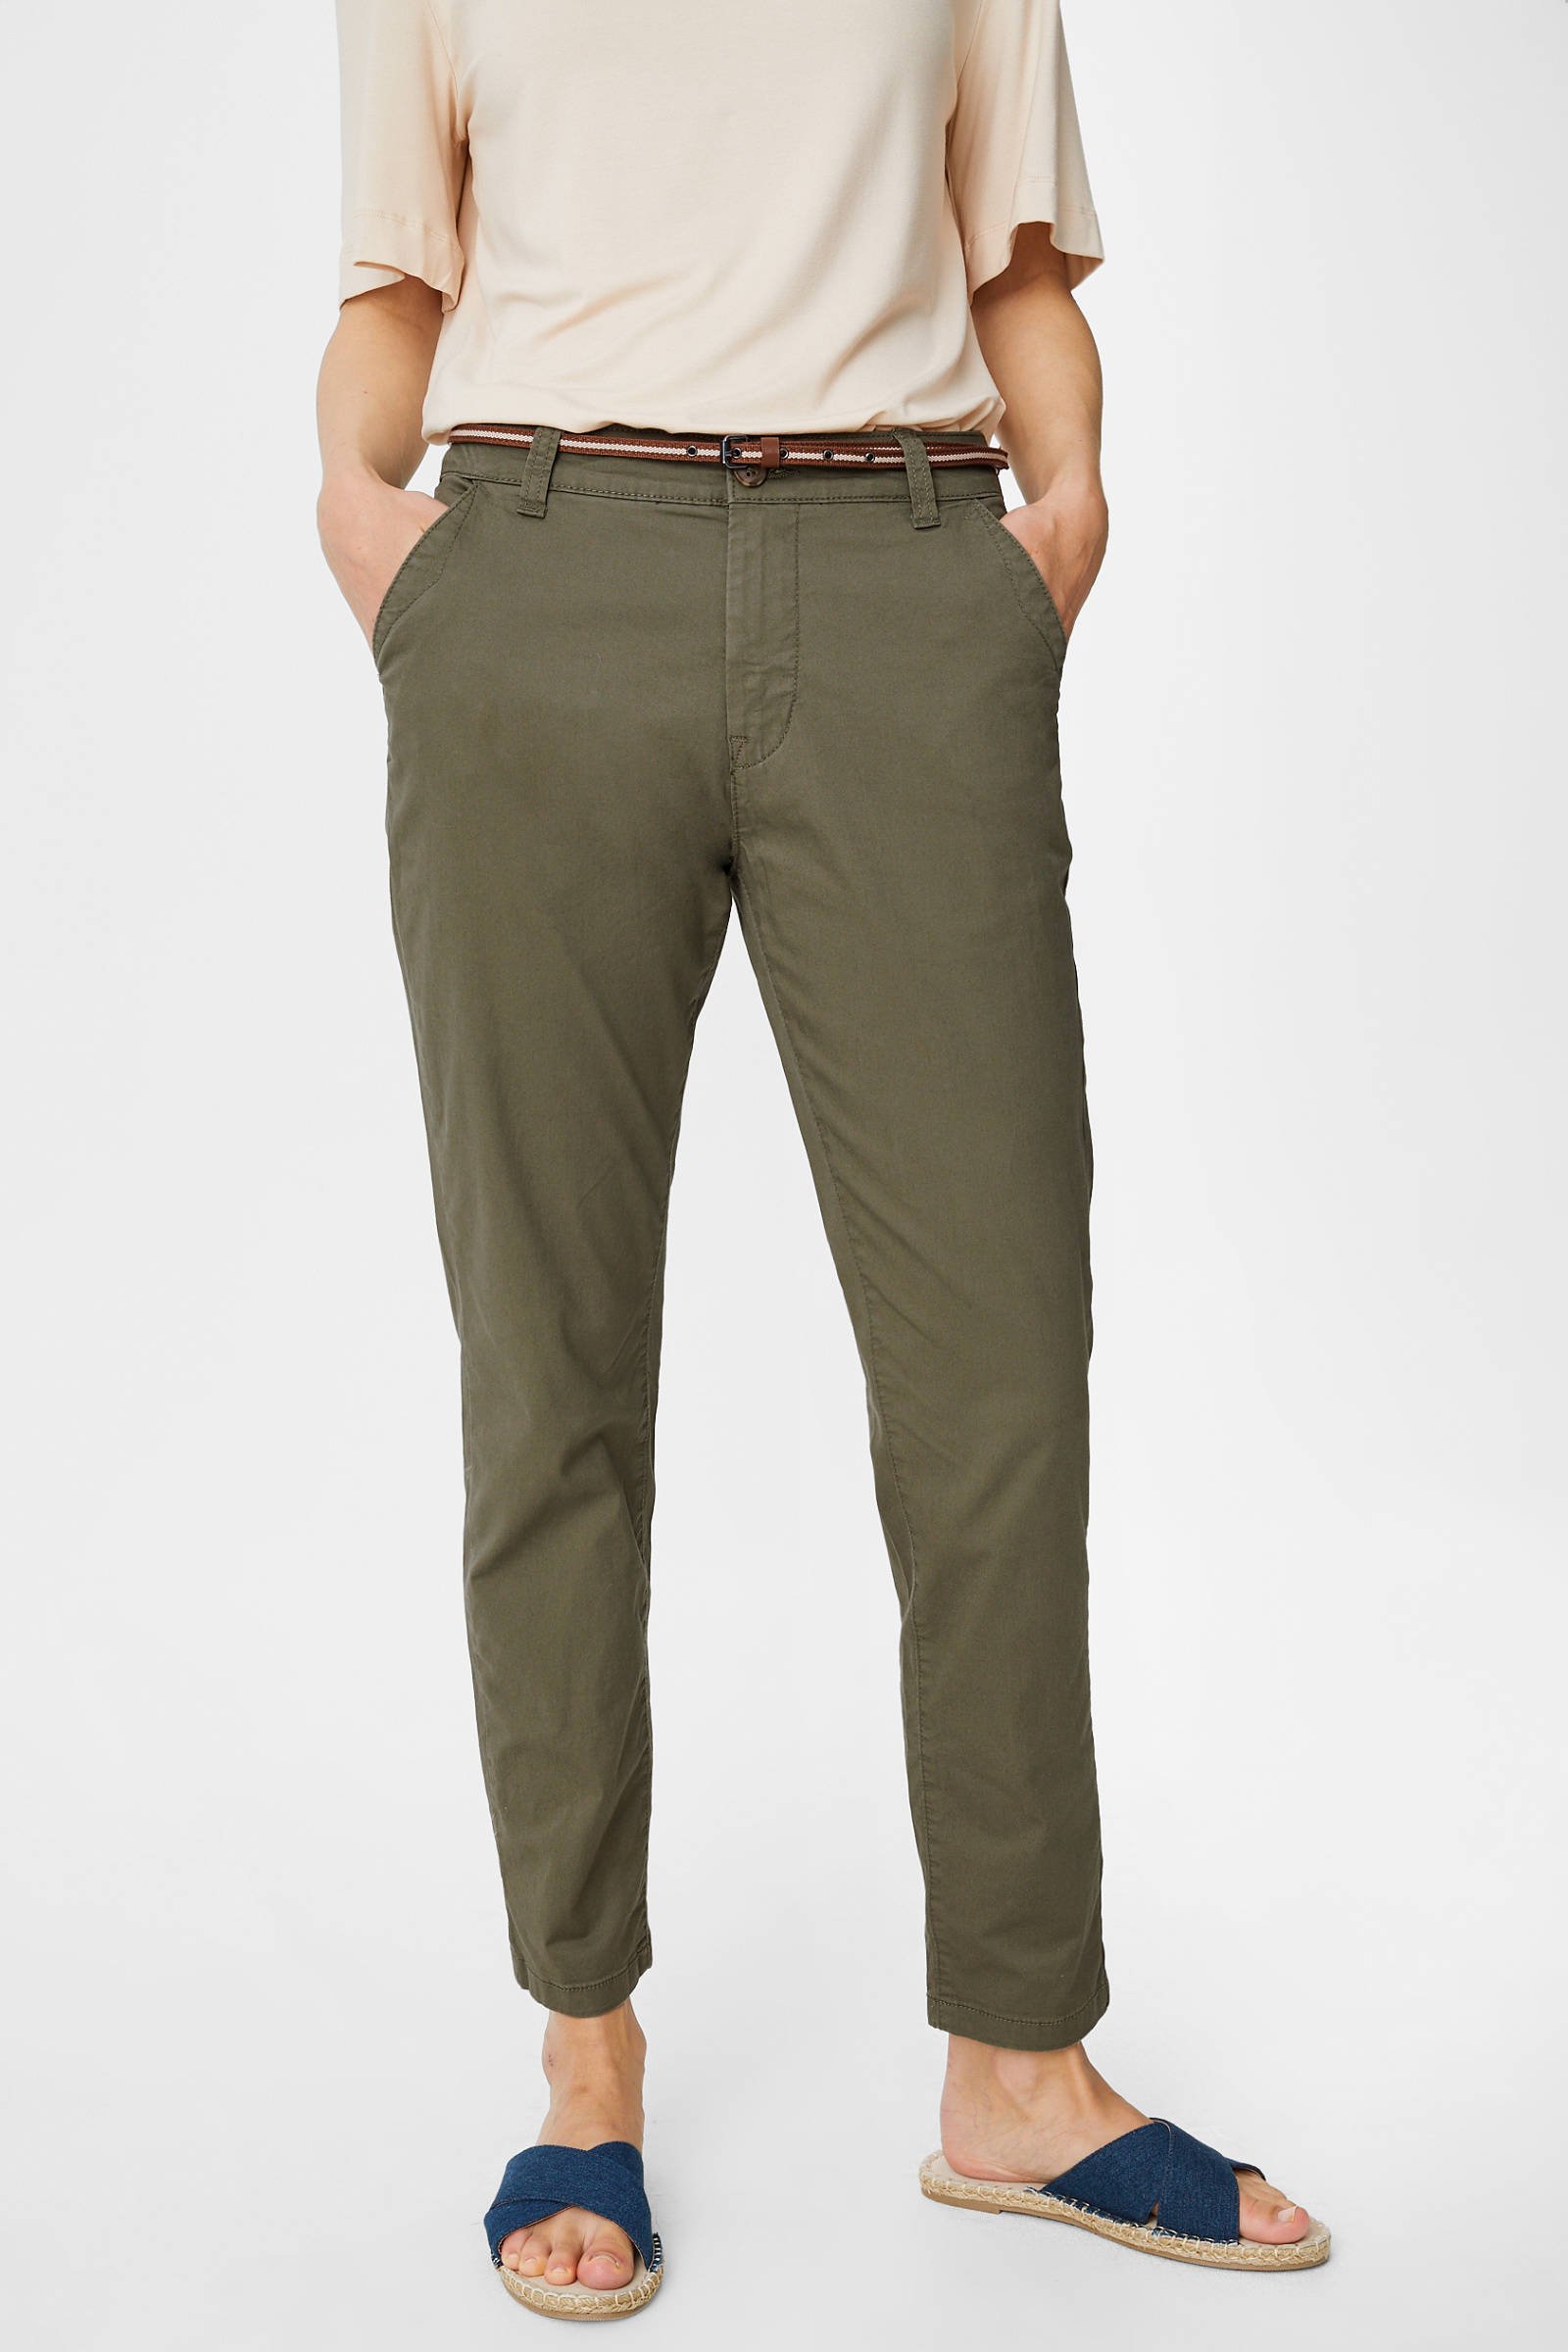 pantalons en chinos voor Skinny broeken Dames Kleding voor voor Broeken Prada Katoen Floral Print Slim-fit Trousers in het Zwart 